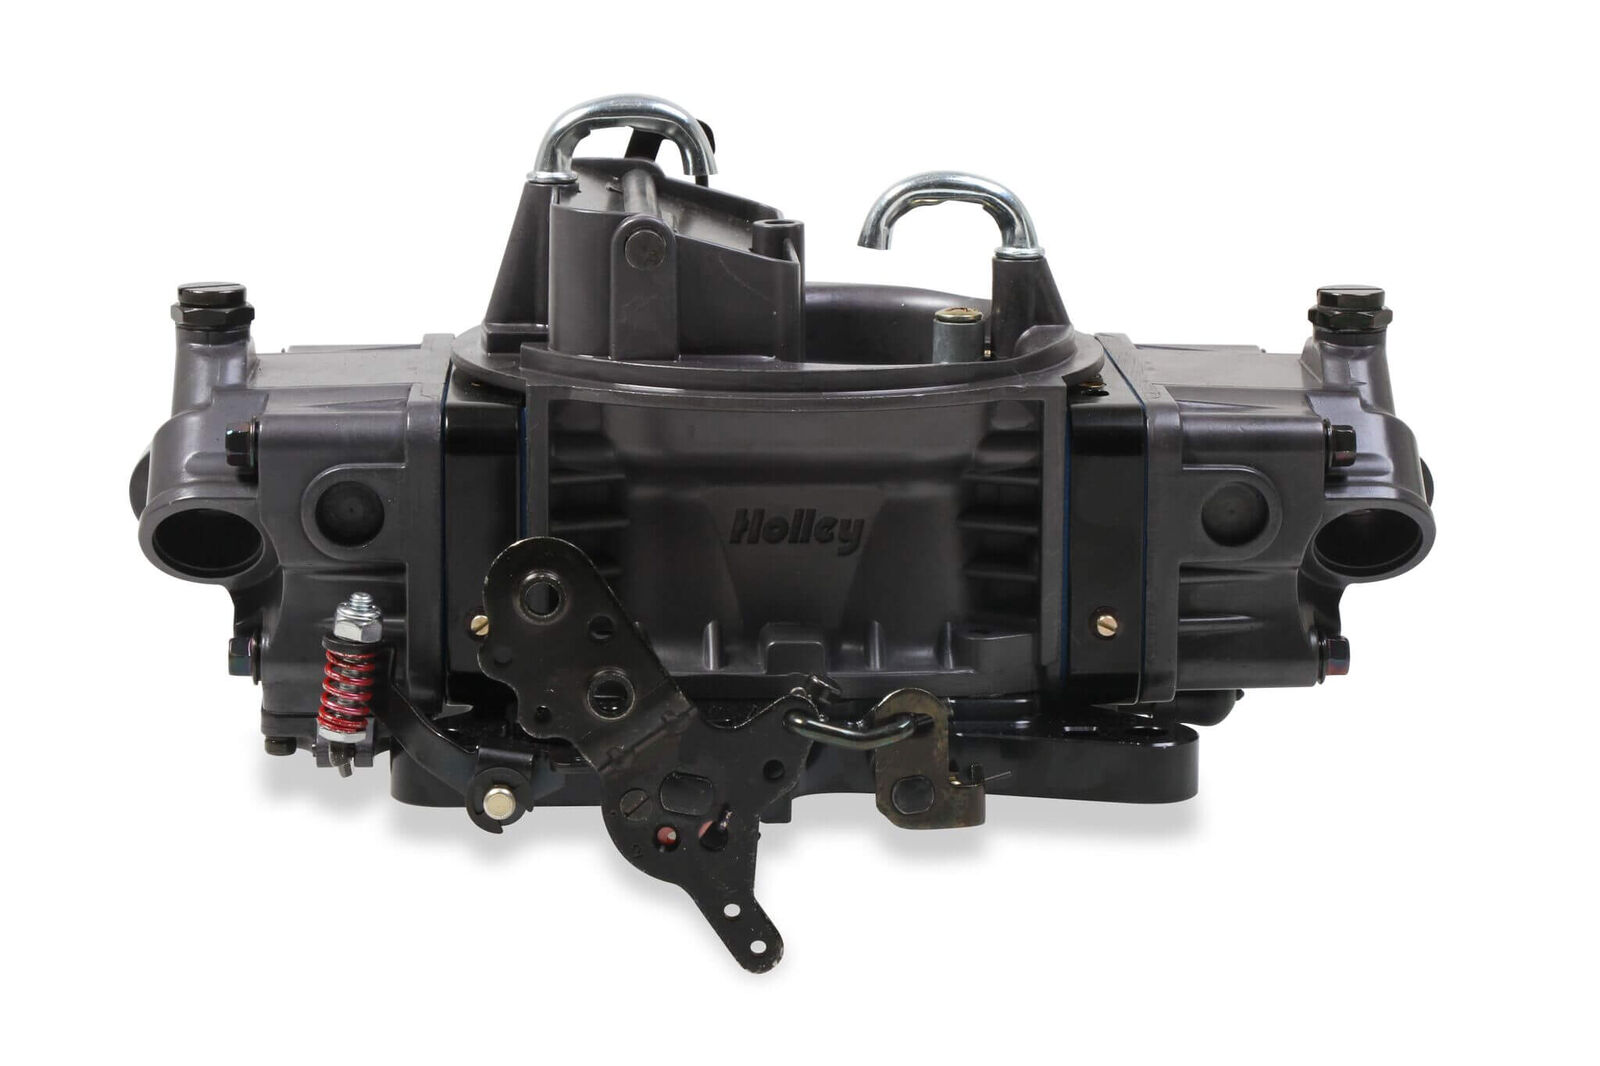 Holley 750 Cfm Pumper Marine Carburetor Electric Choke Mechanical Secondaries